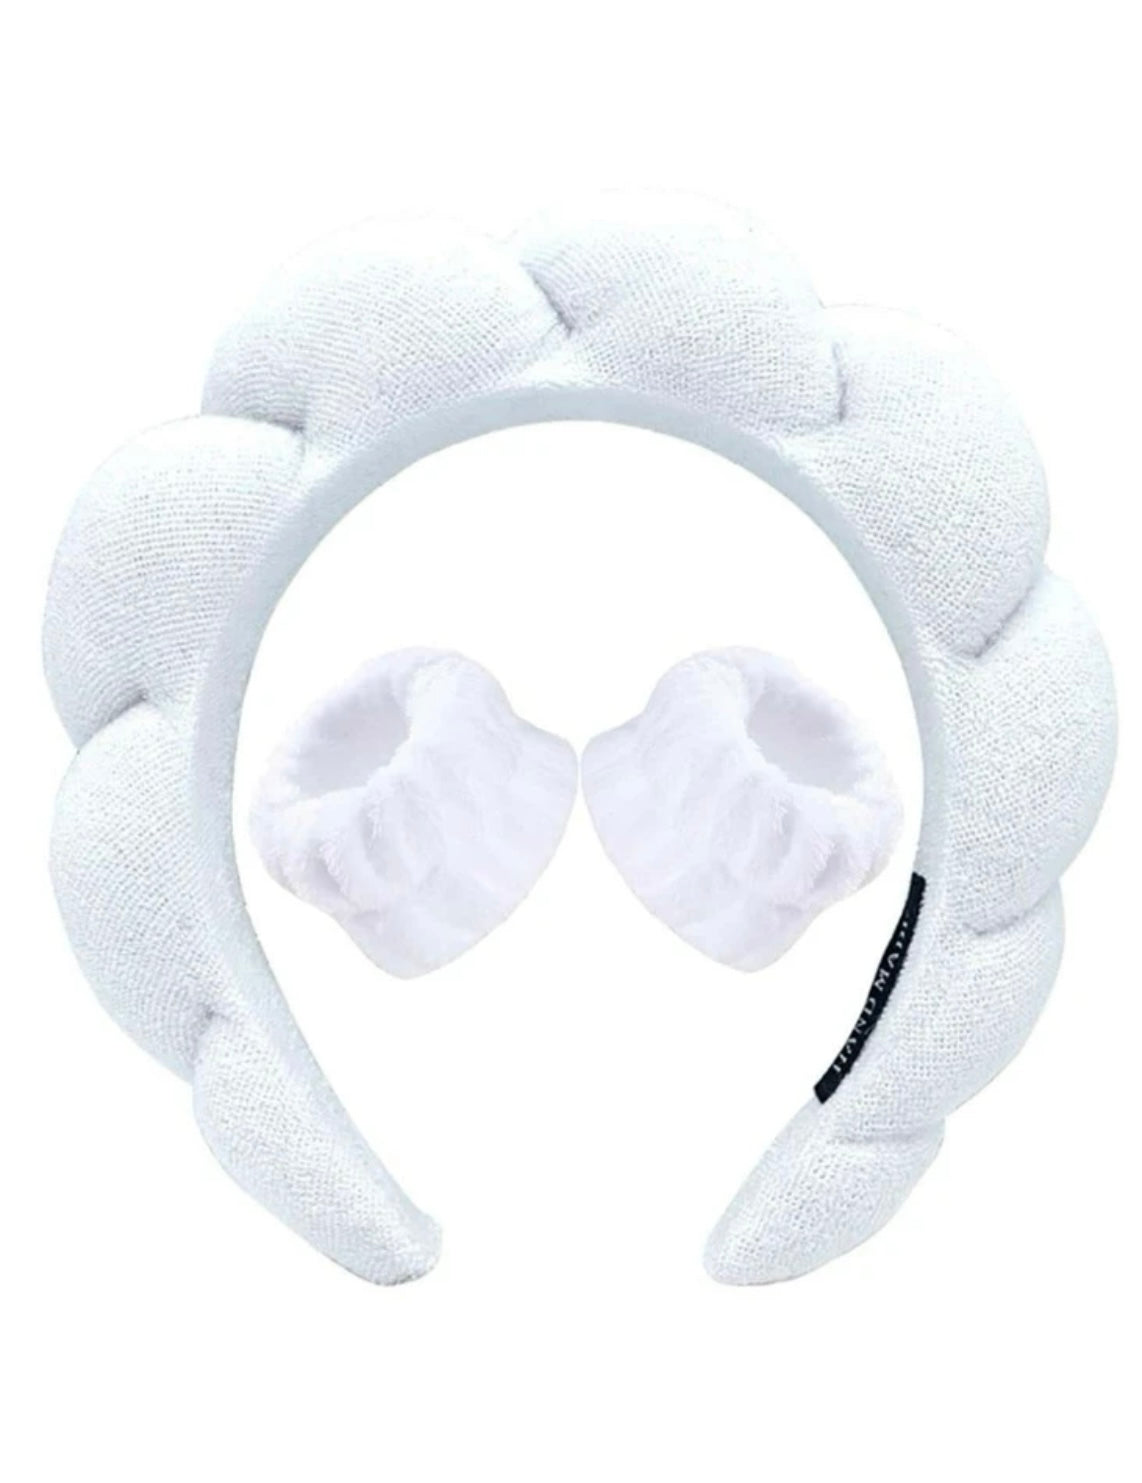 Spa Headband and Cuff Set